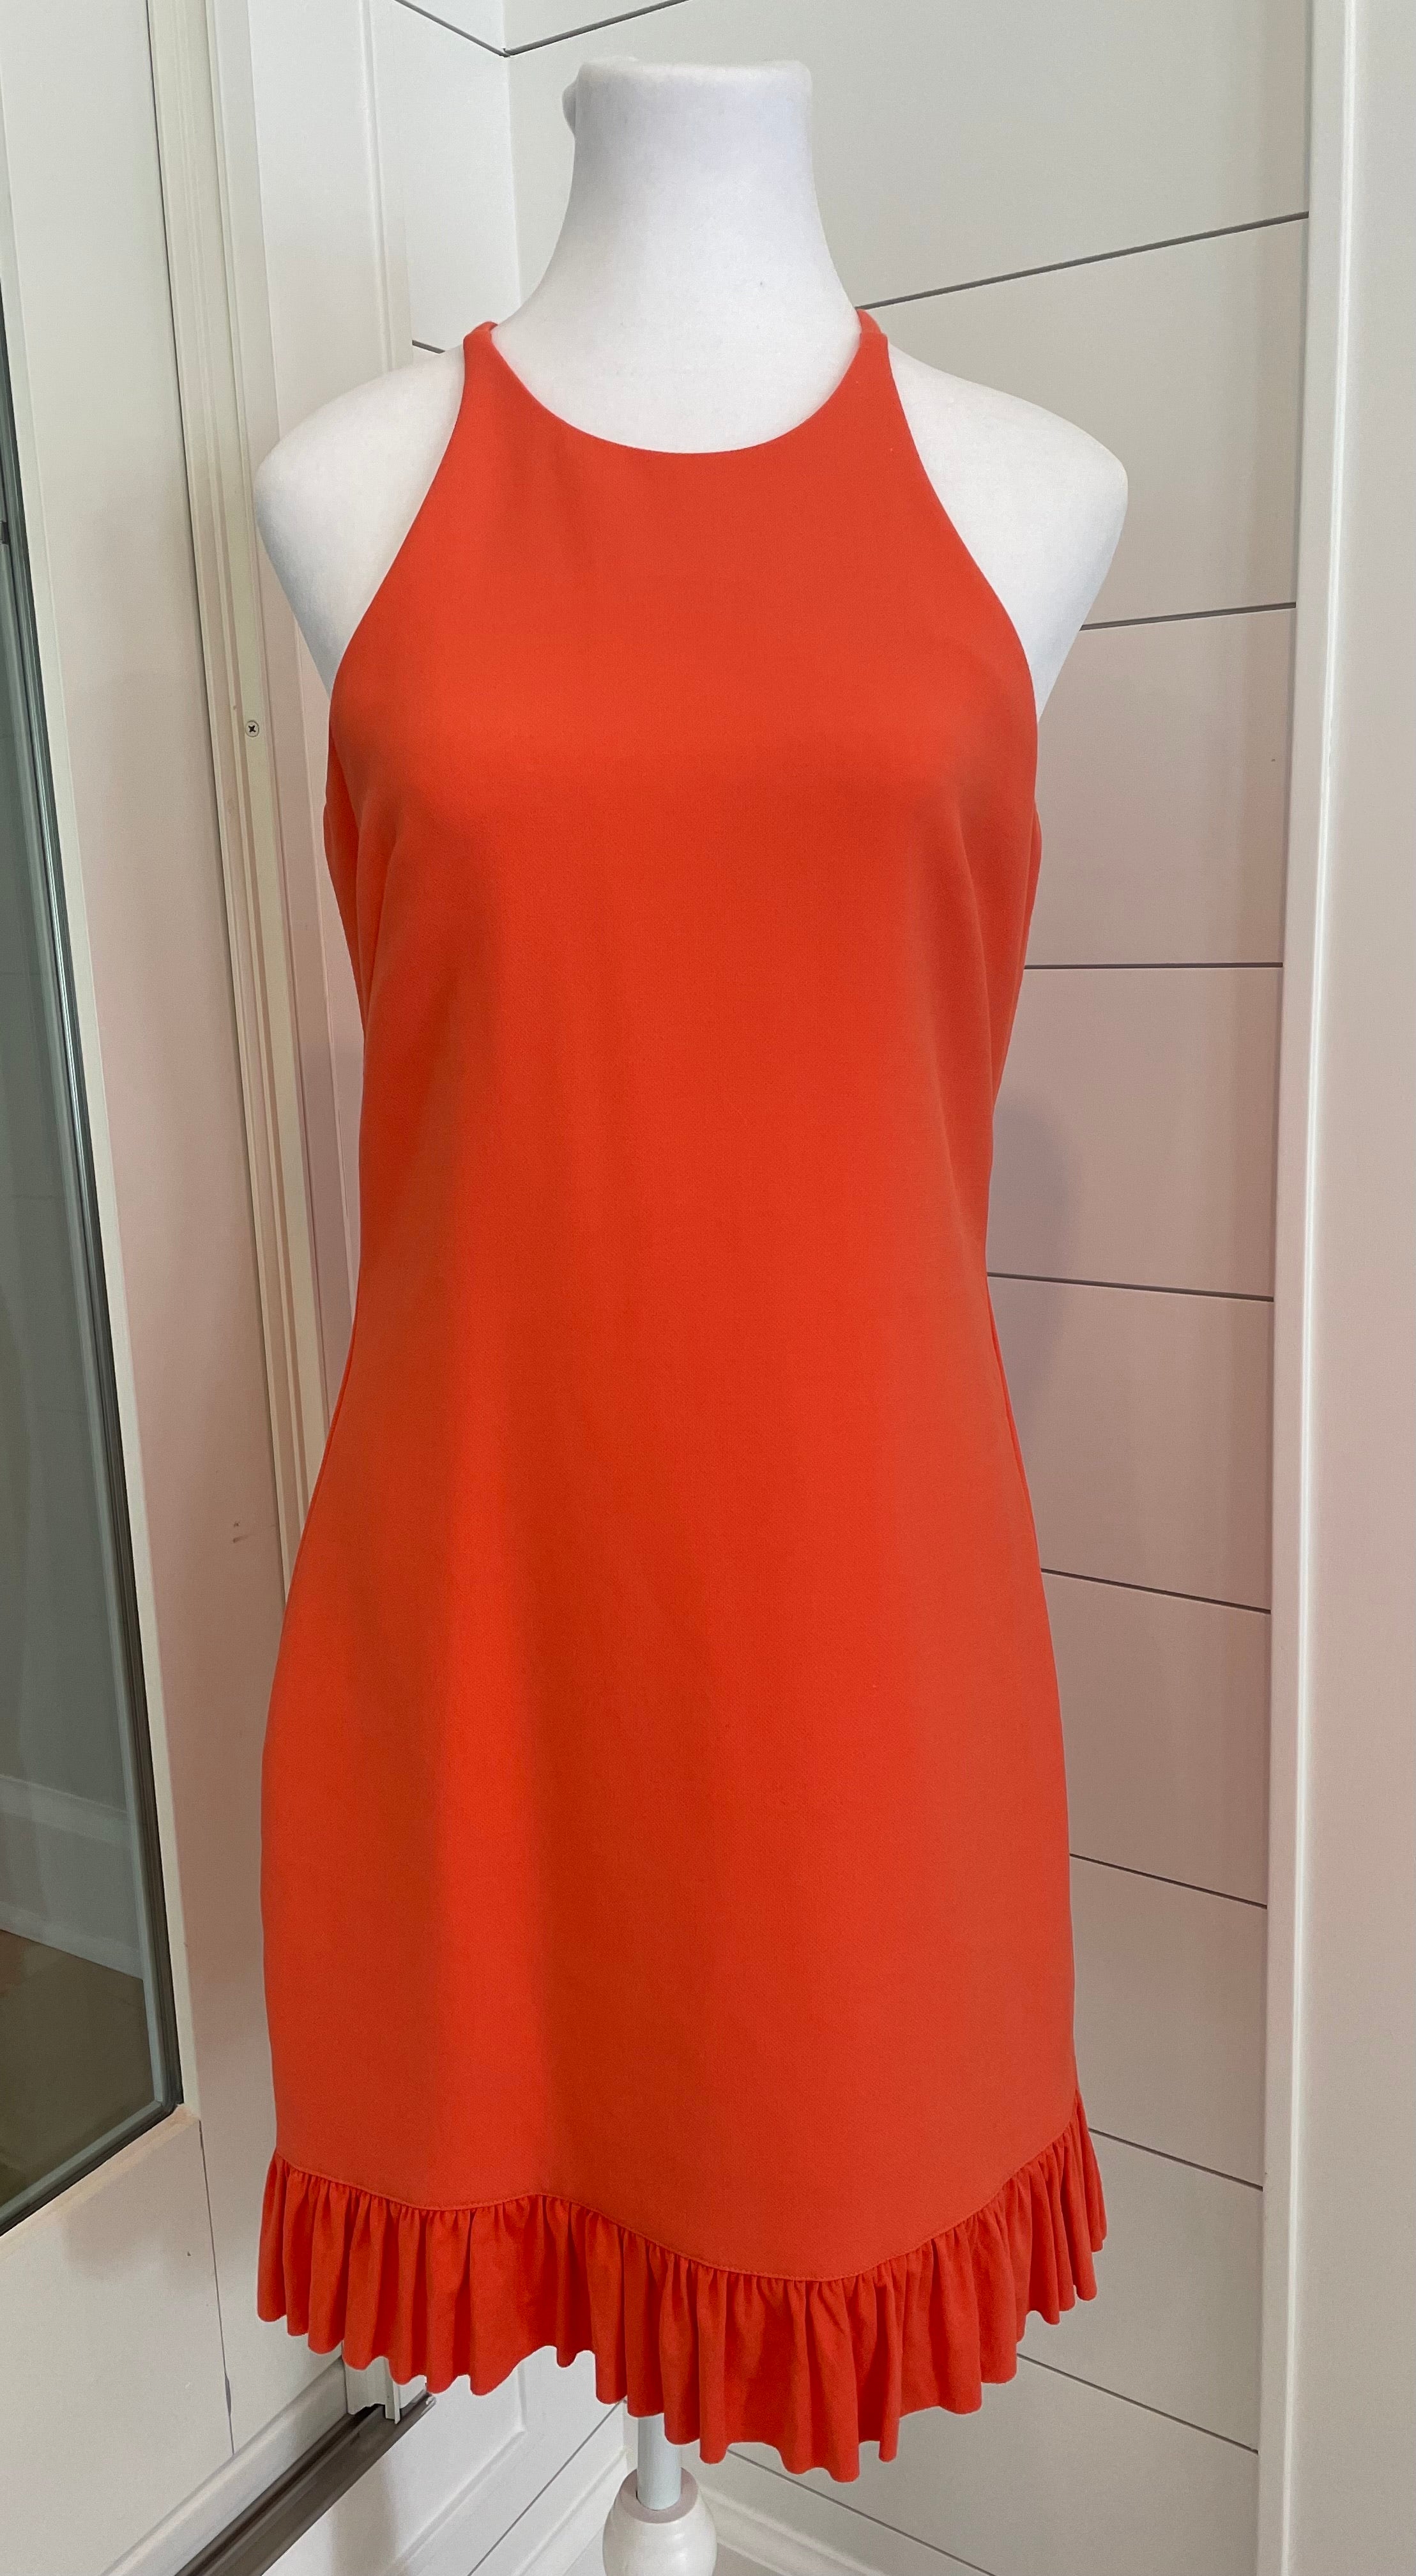 Artelier Nicole Miller Halter Dress, Orange Womens Size M